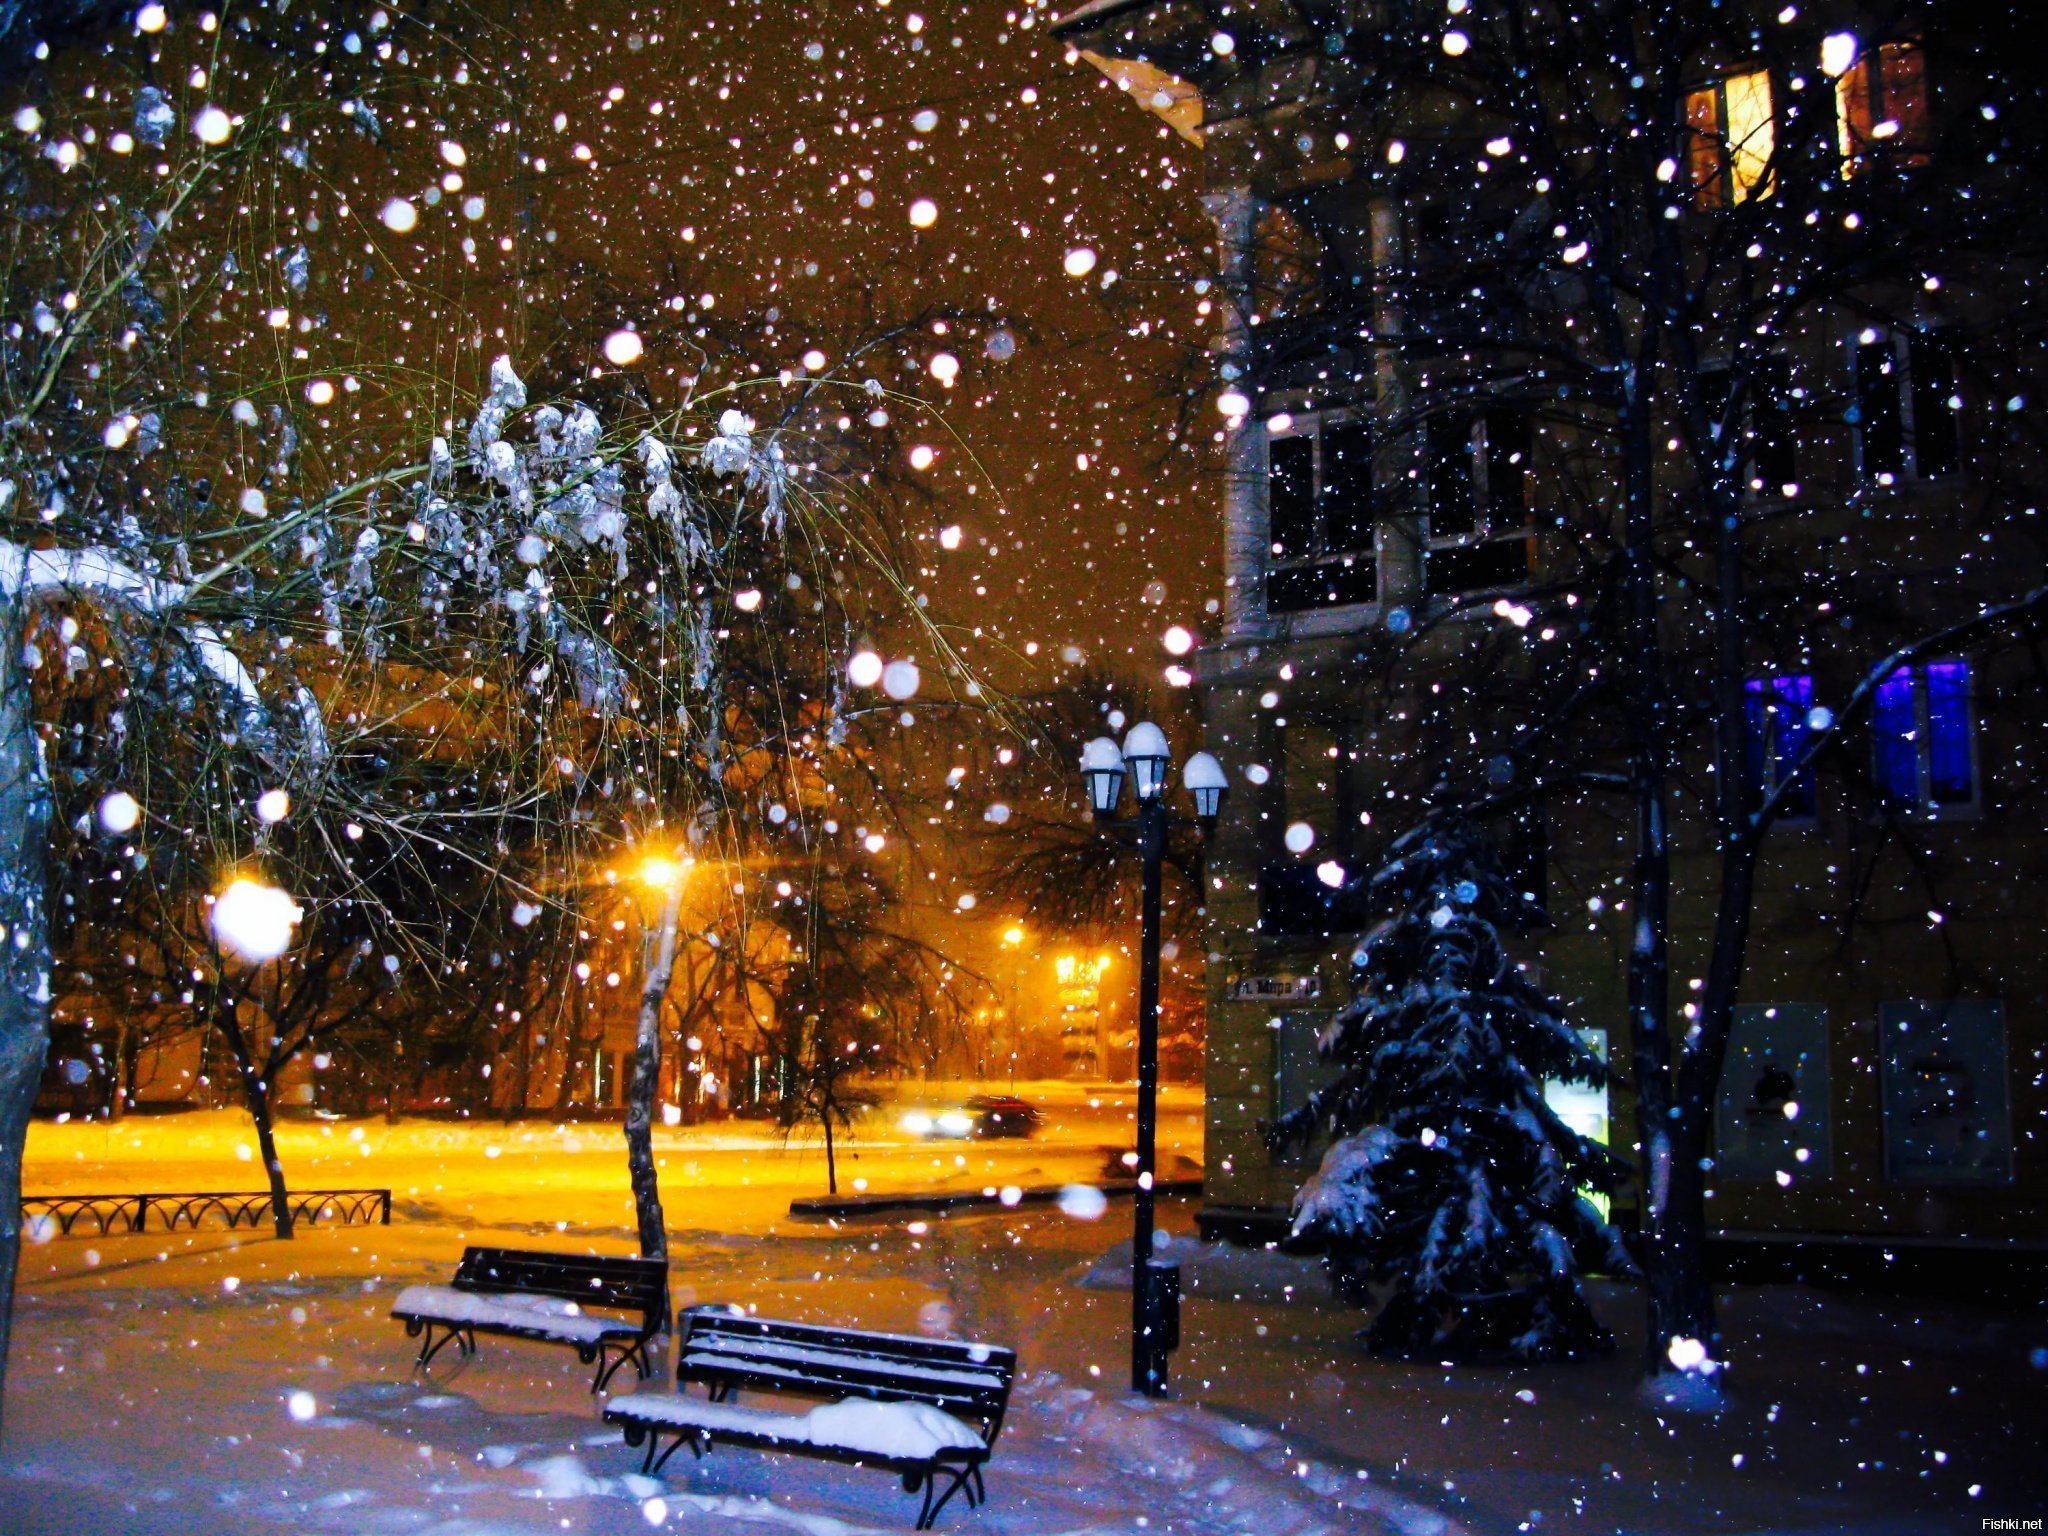 Включи падающий снег. Красивый снегопад. Зима в городе. Падающий снег. Ночной зимний город.